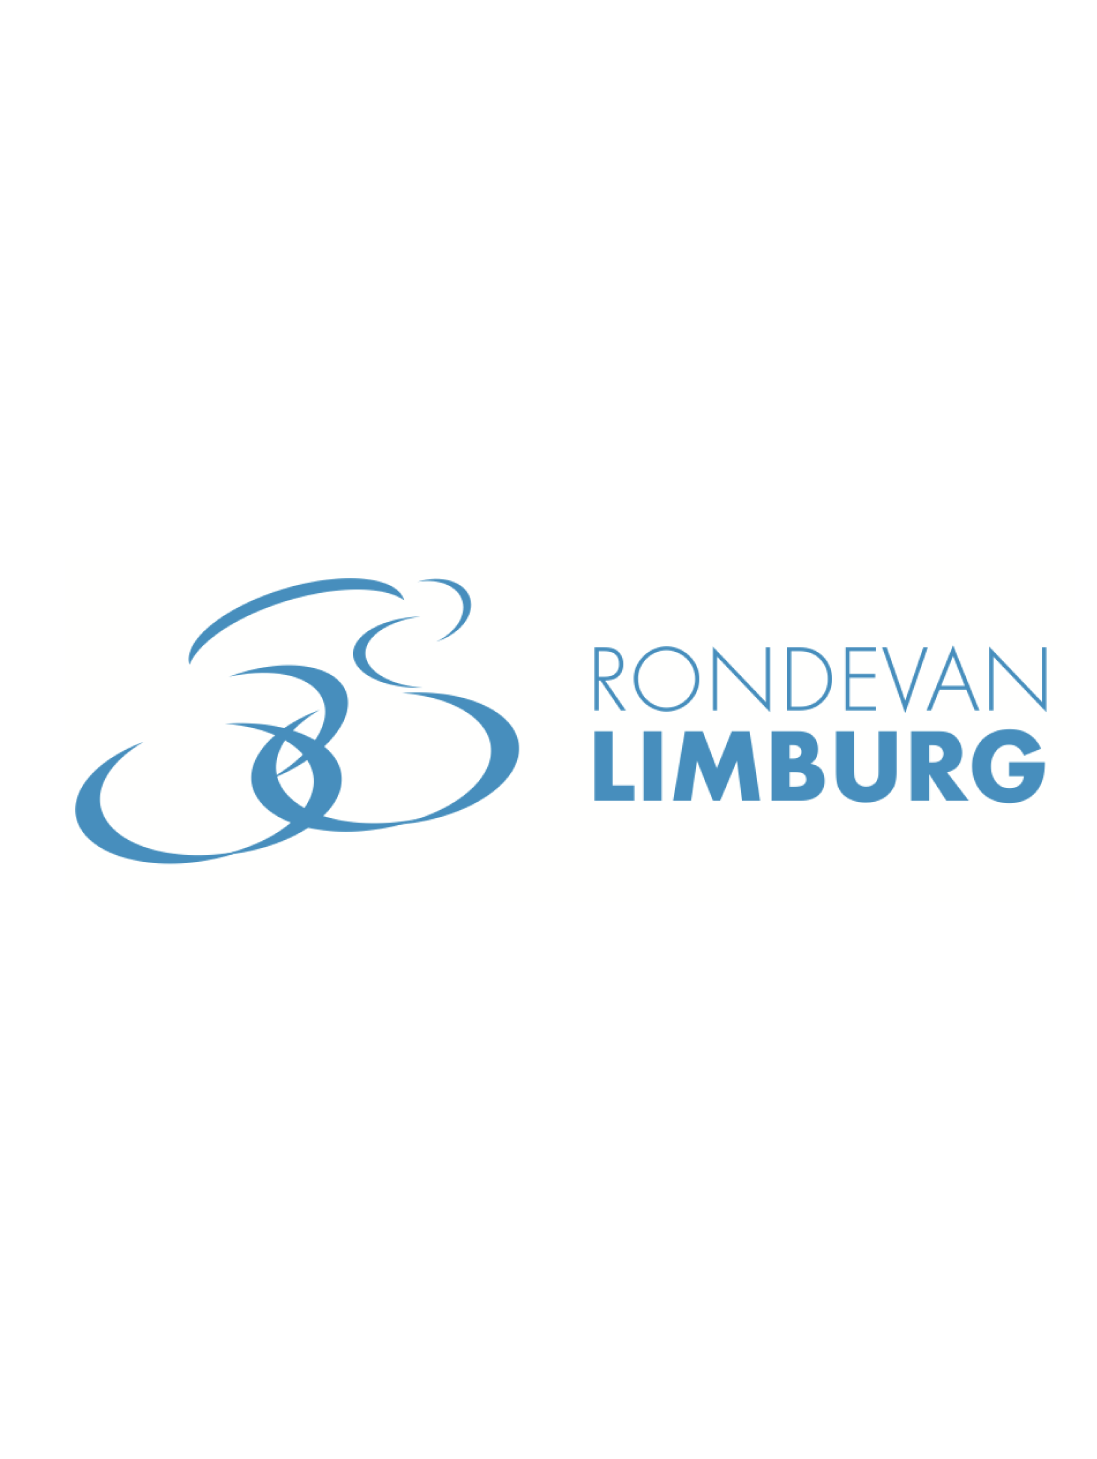 Ronde van Limburg